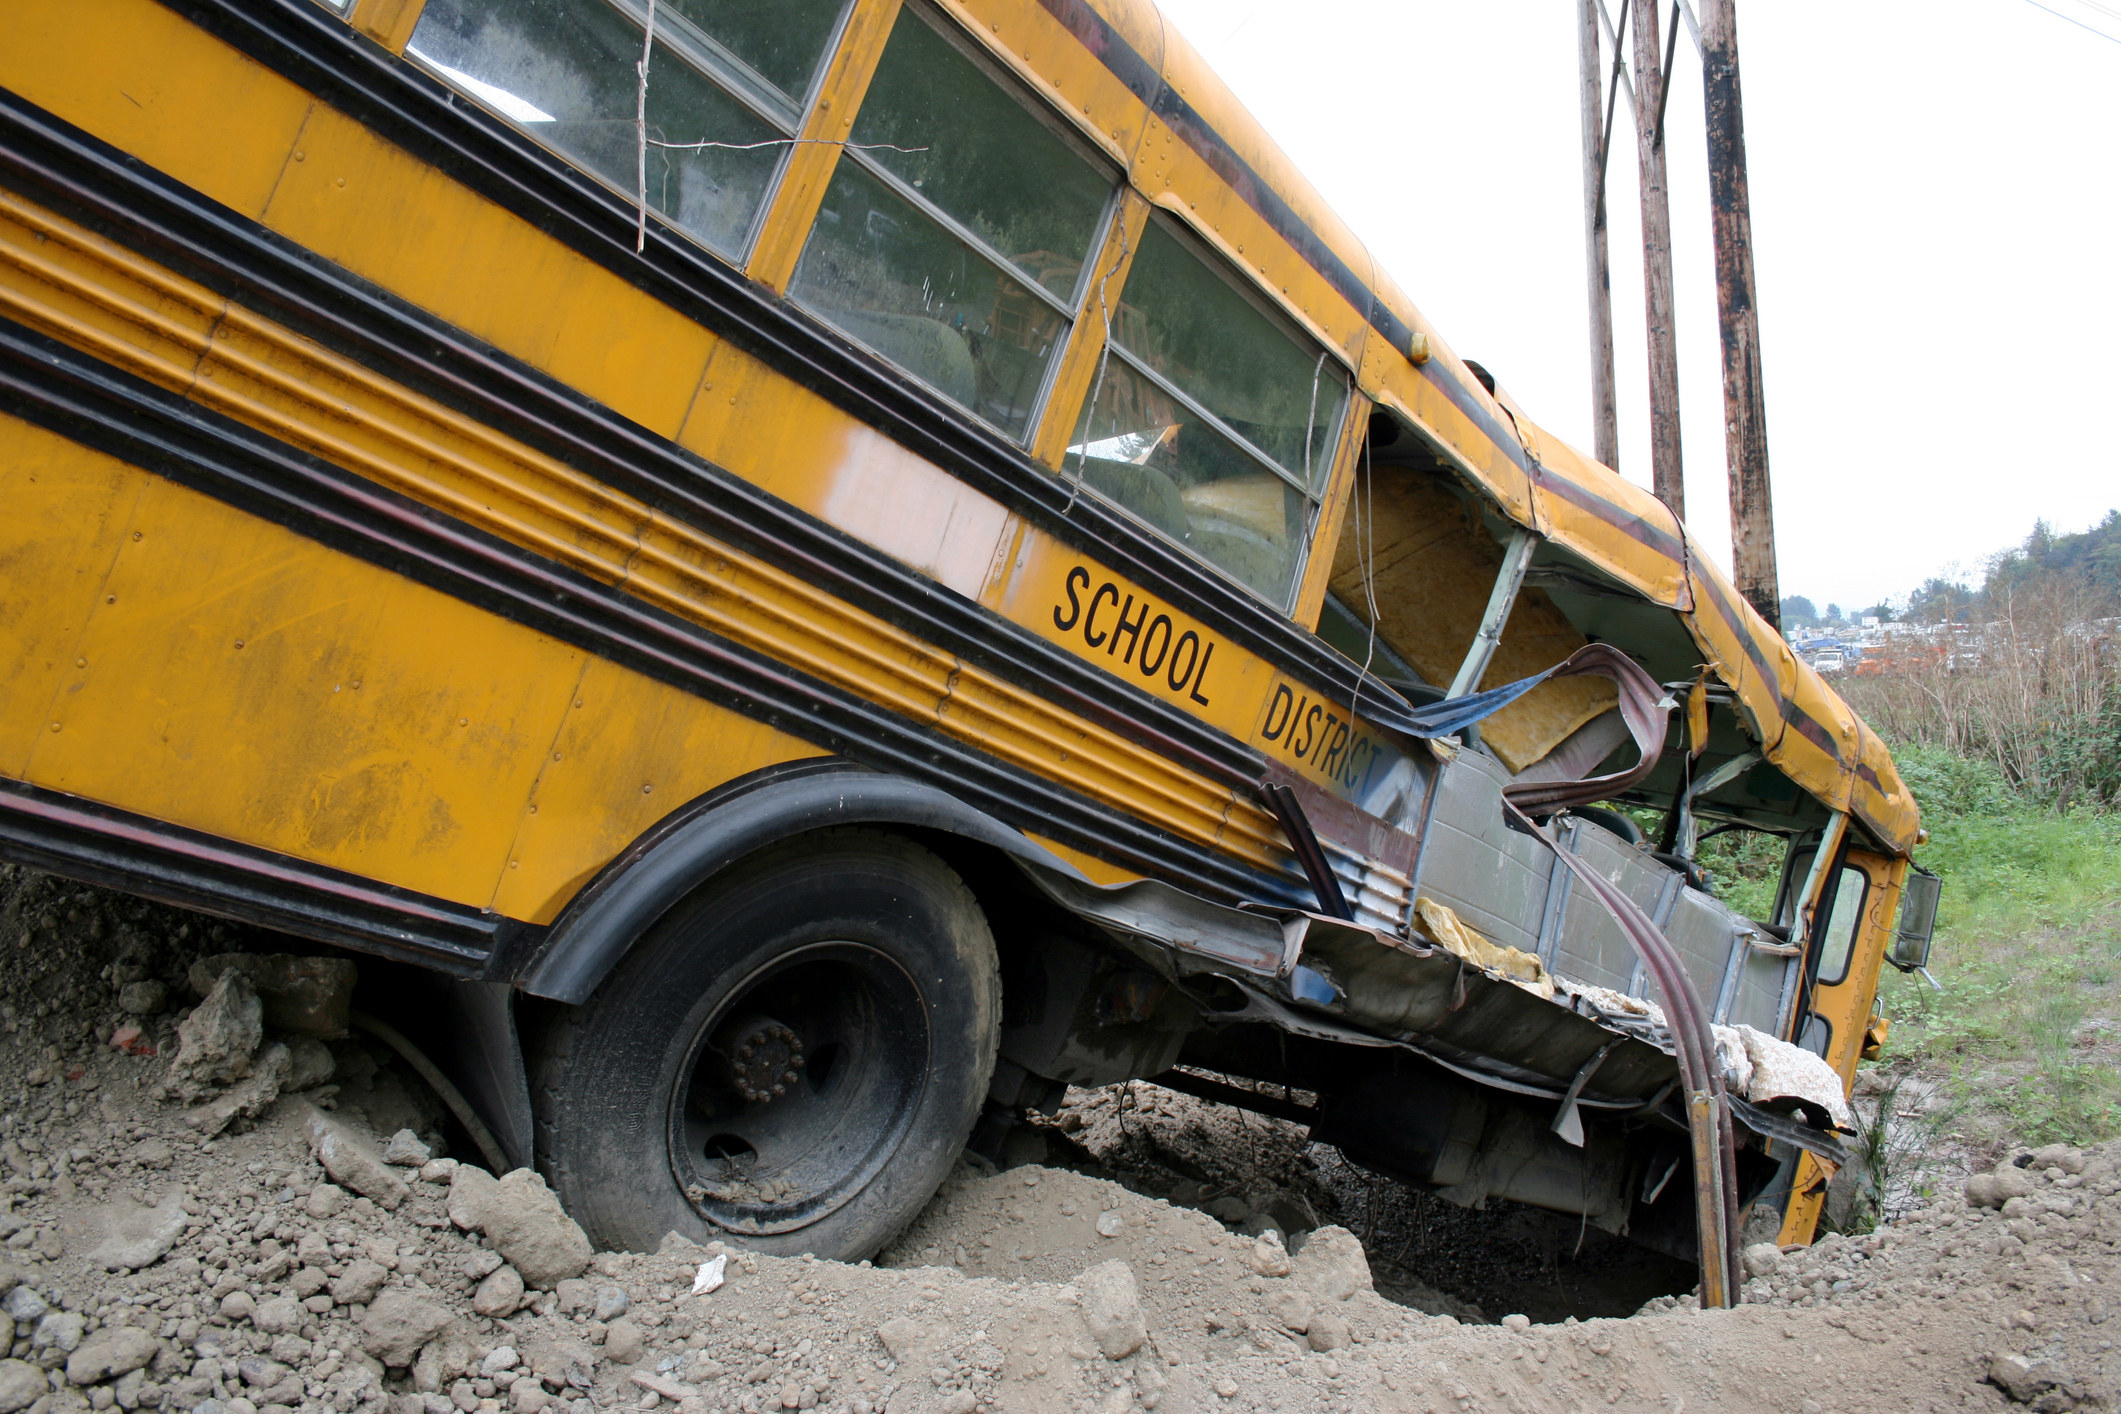 A crashed school bus